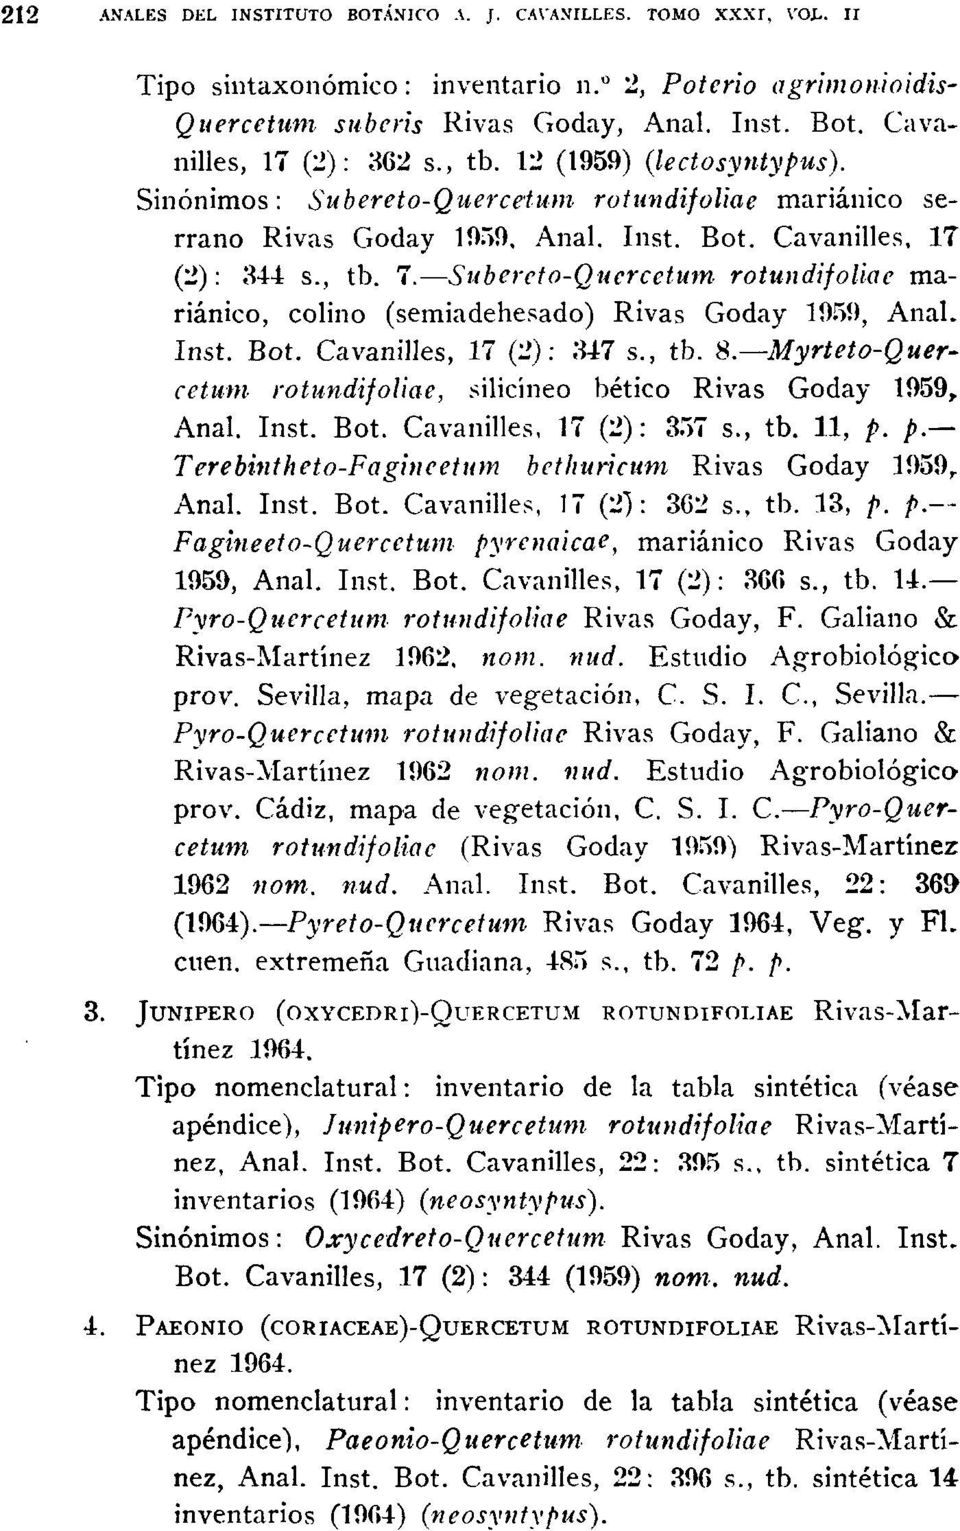 Subereto-Quercetum rotundifoliae mariánico, colino (semiadehesado) Rivas Goday 1959, Anal. Inst. Bot. Cavanilles, 17 (2): 347 s., tb. 8.